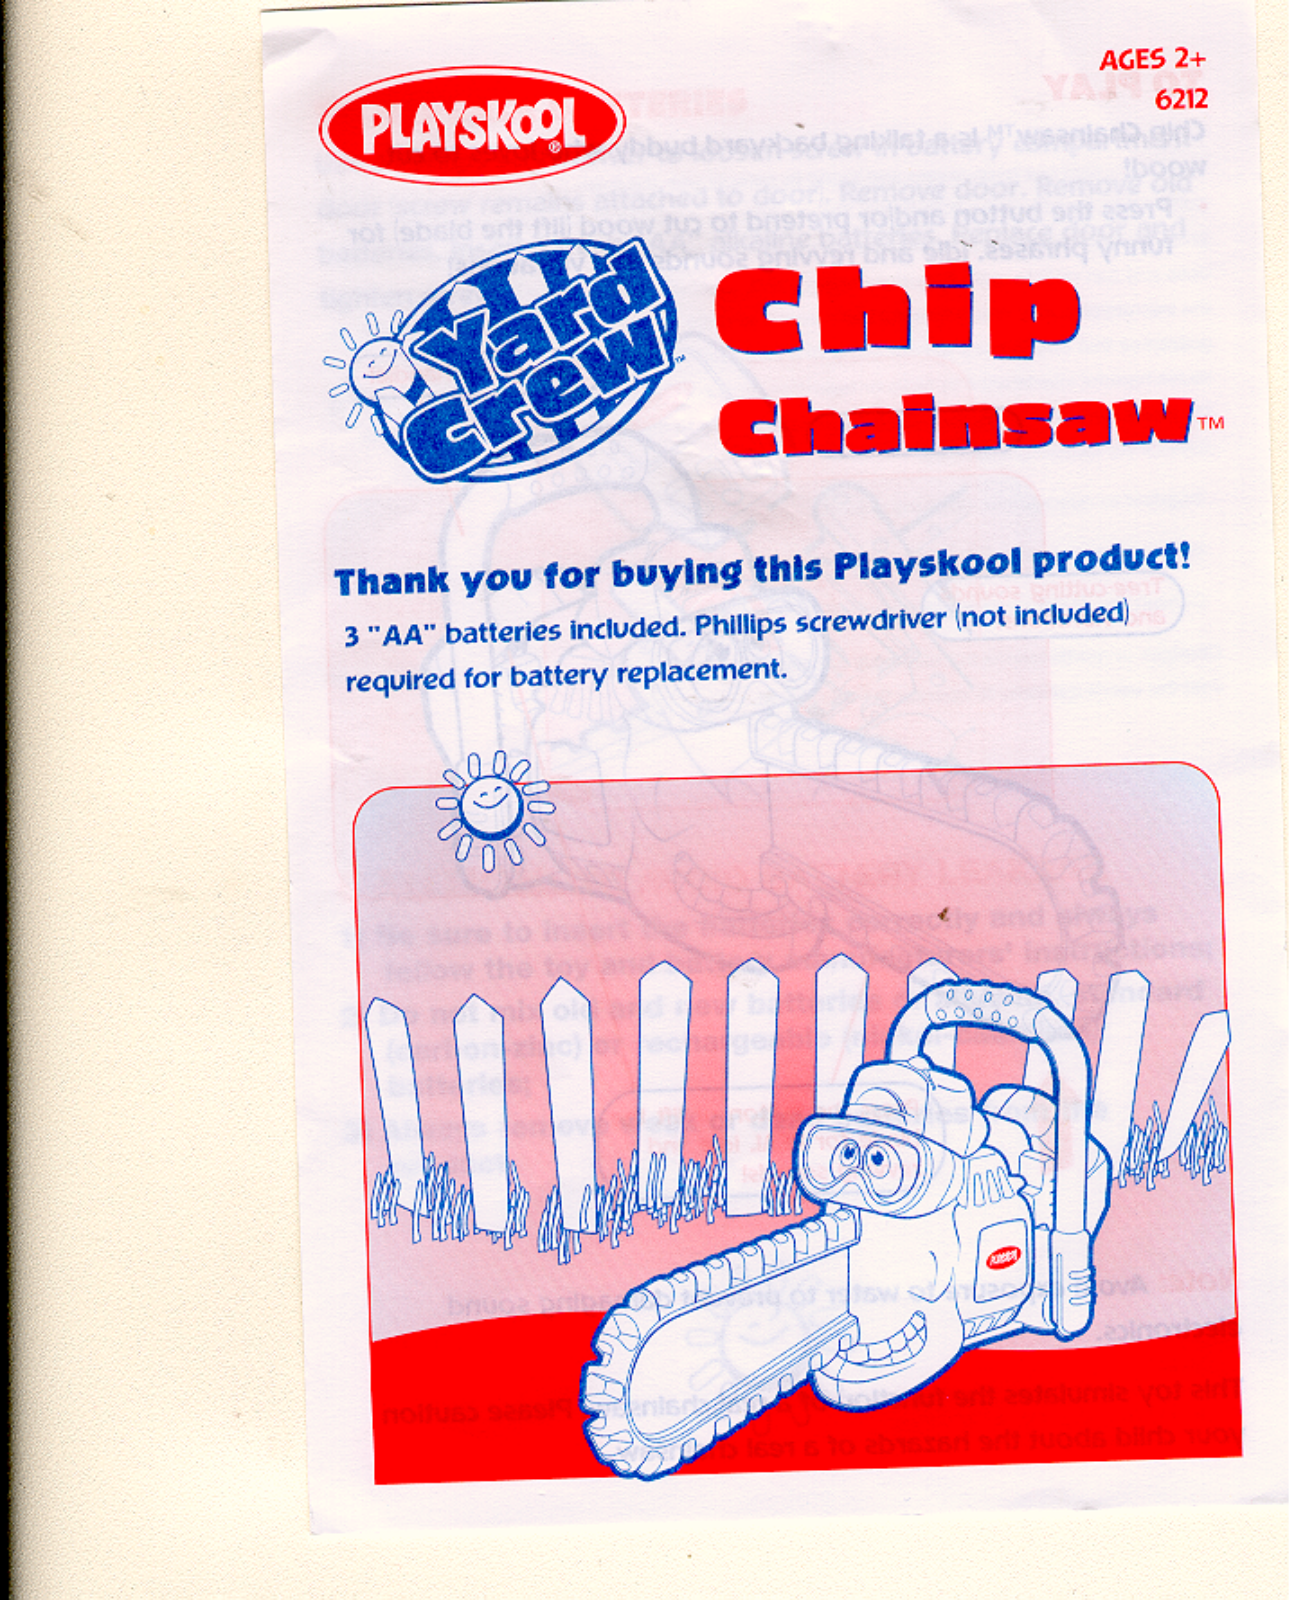 HASBRO Chip Chainsaw User Manual